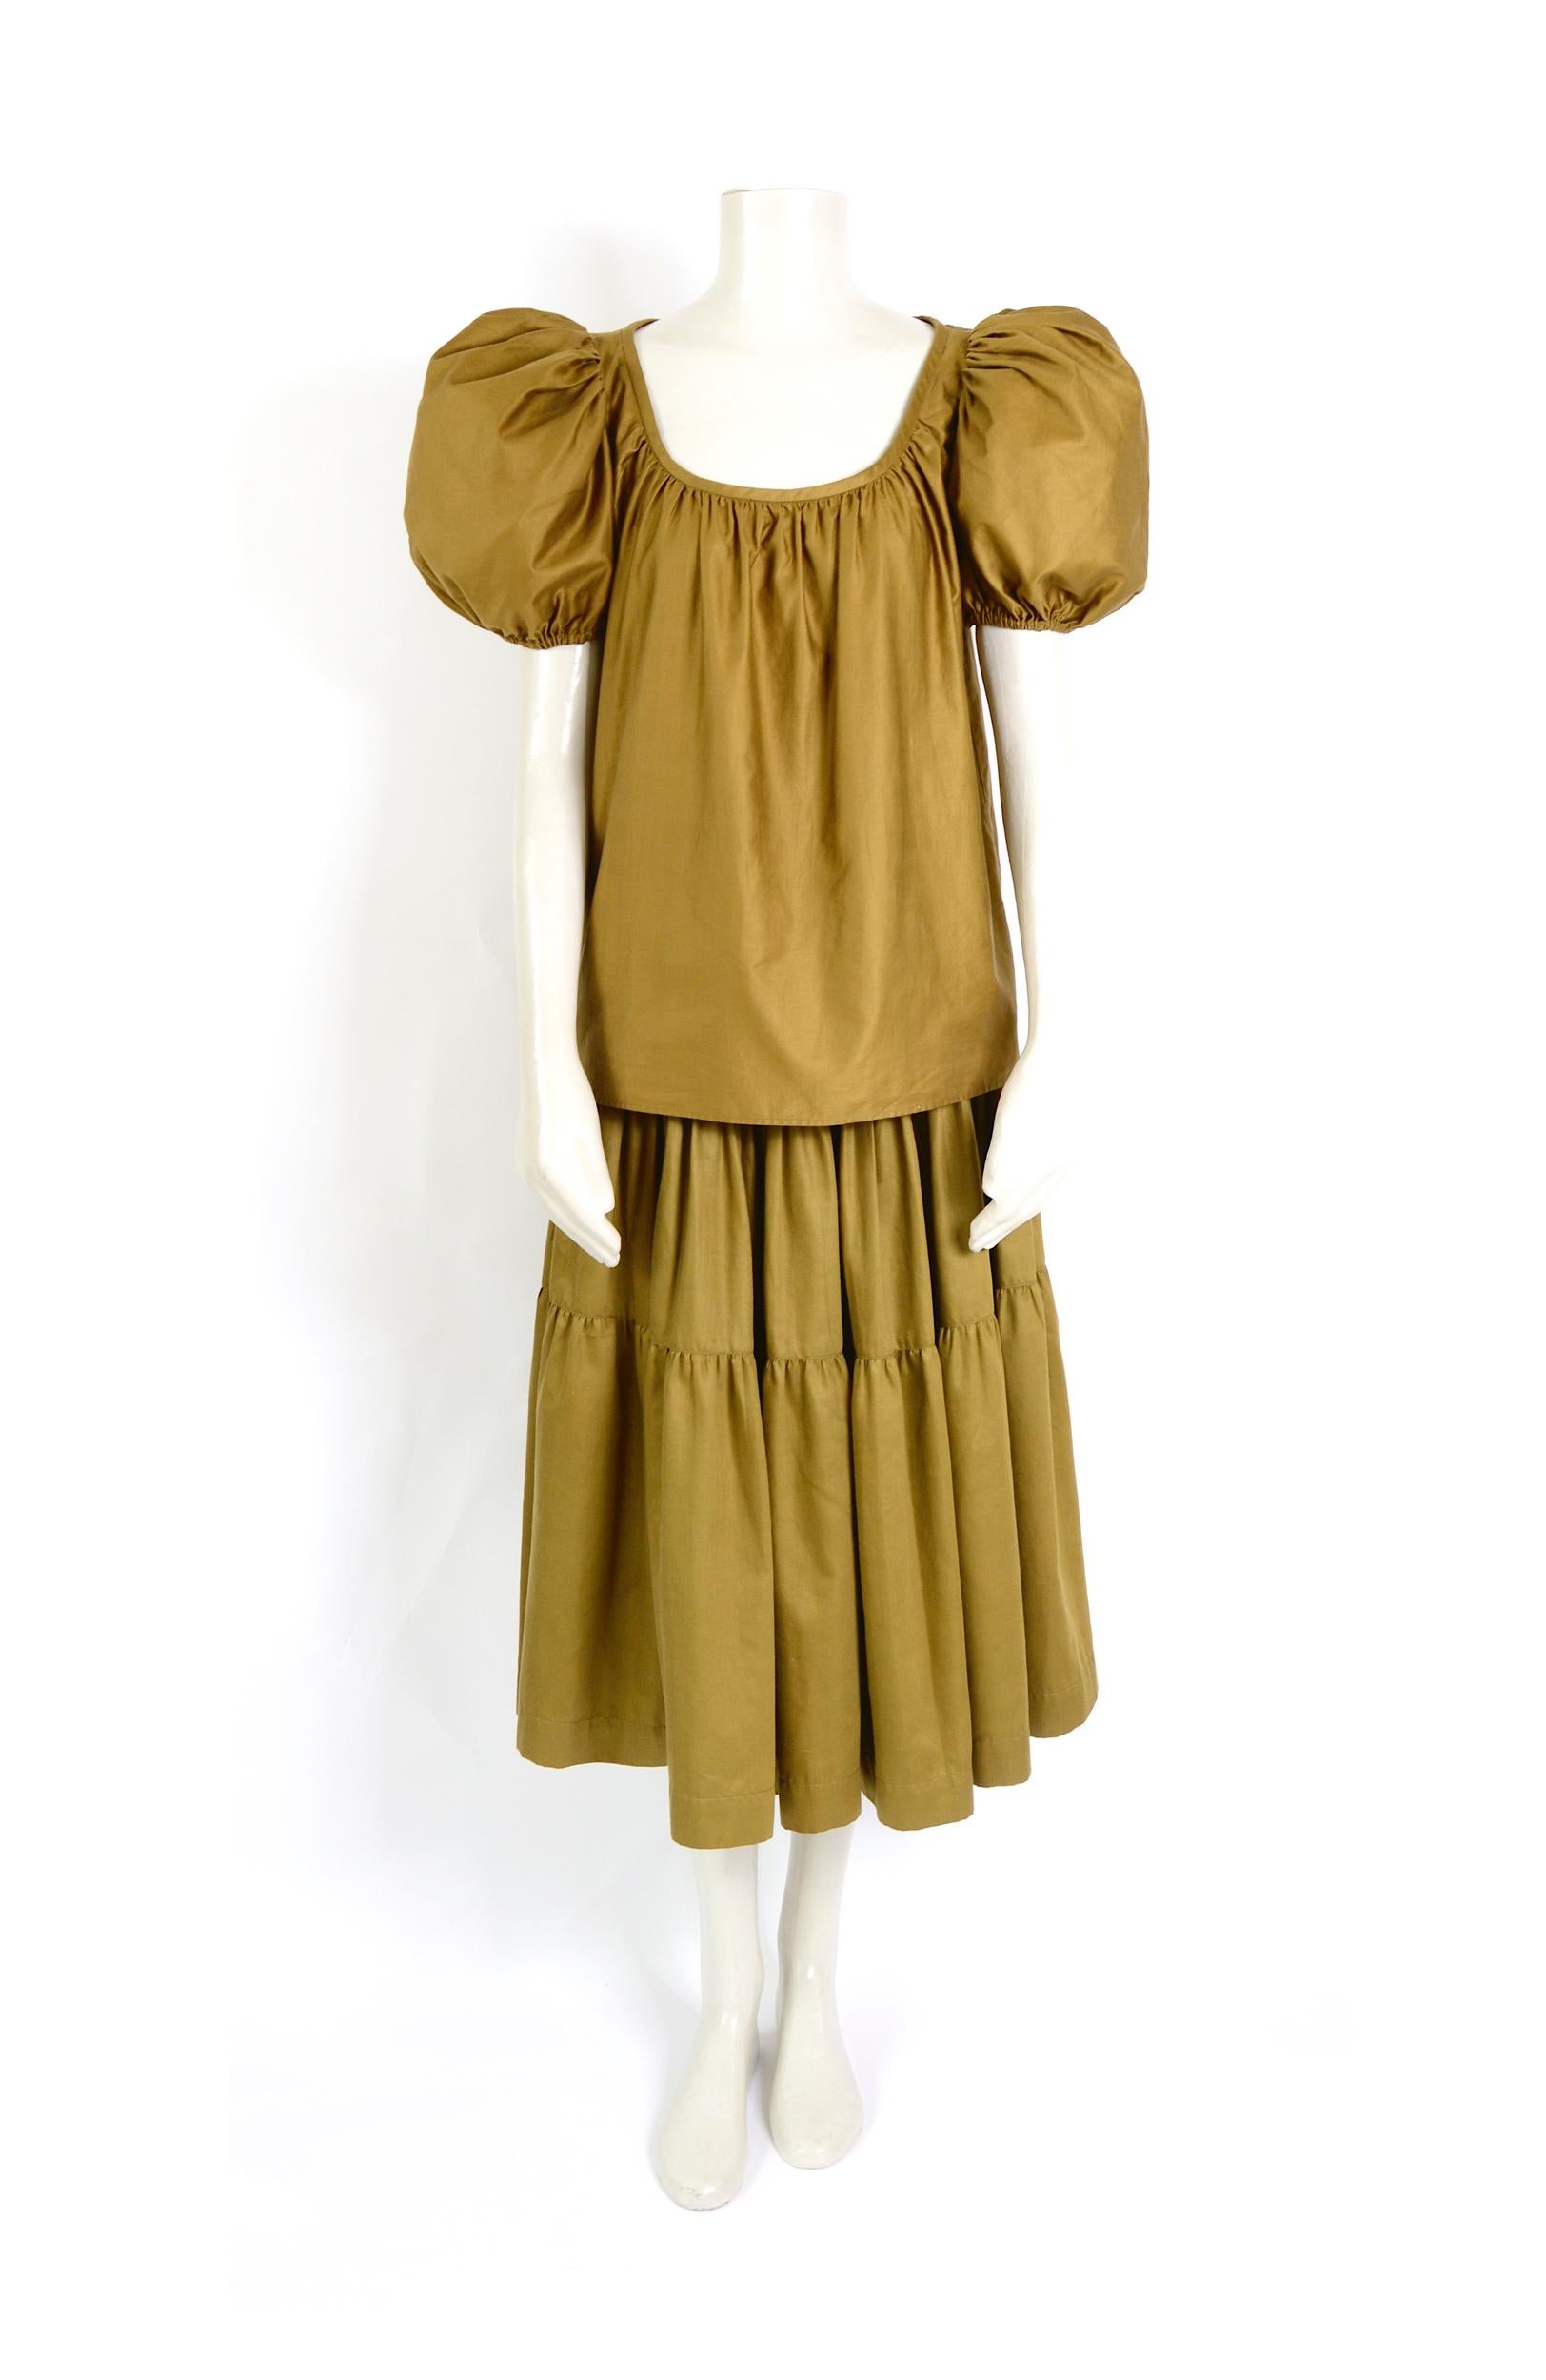 Yves Saint Laurent iconic 1970s vintage khaki cotton peasant top and skirt set 1